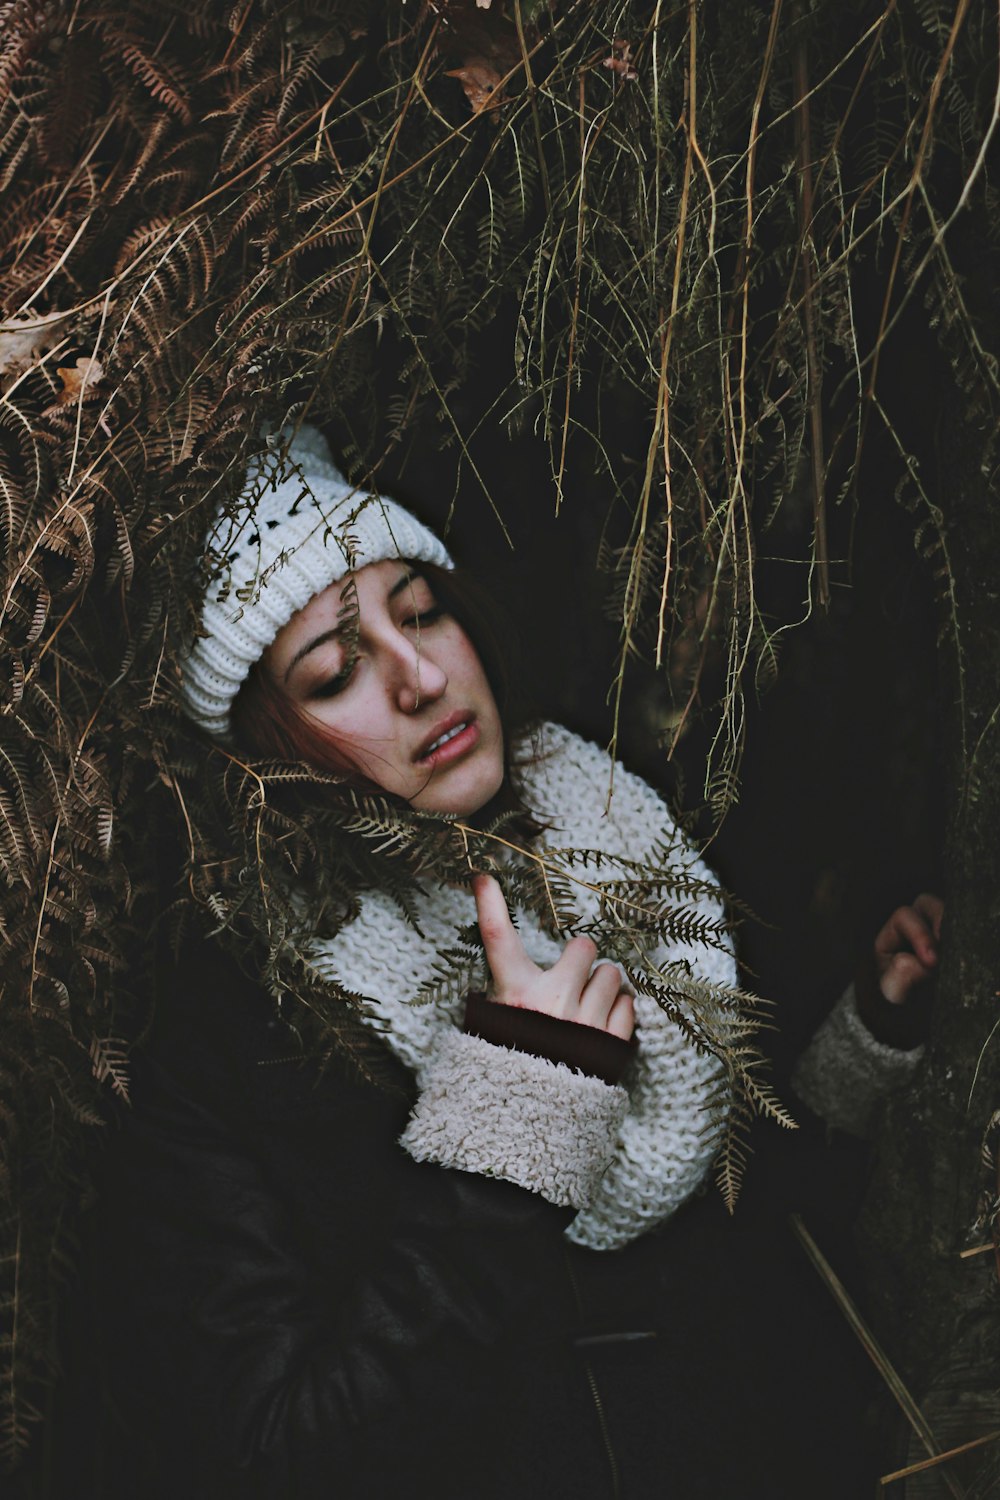 woman wrap by dried grass